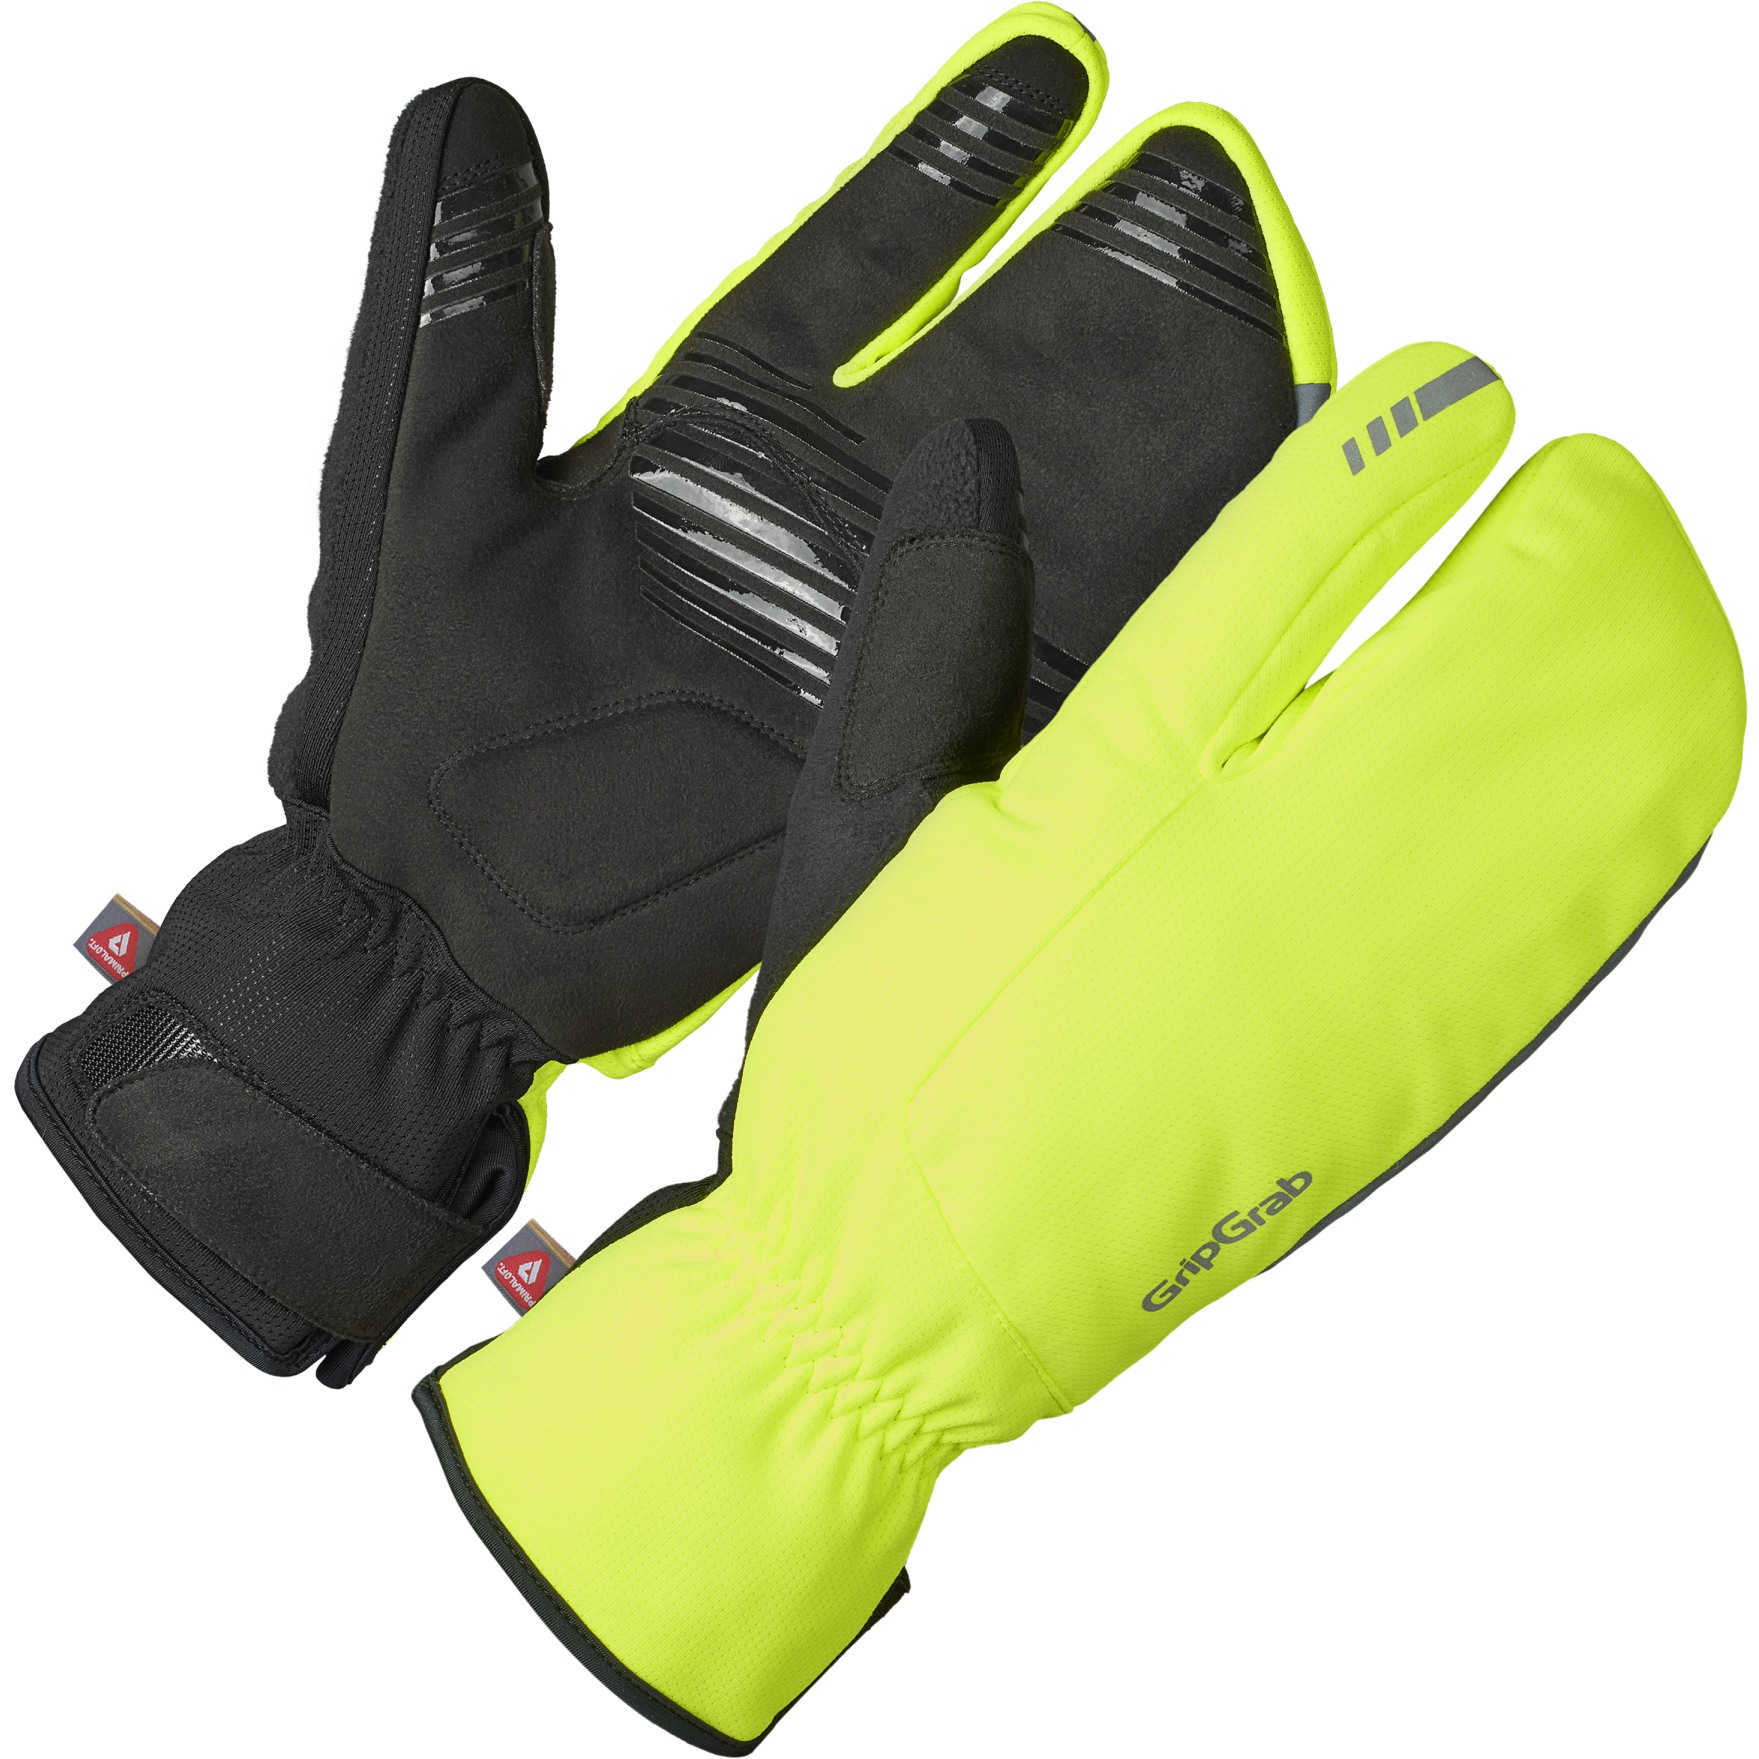 https://images.bike24.com/i/mb/03/2b/68/gripgrab-nordic-2-windproof-deep-winter-lobster-gloves-yellow-hi-vis-12-1275285.jpg